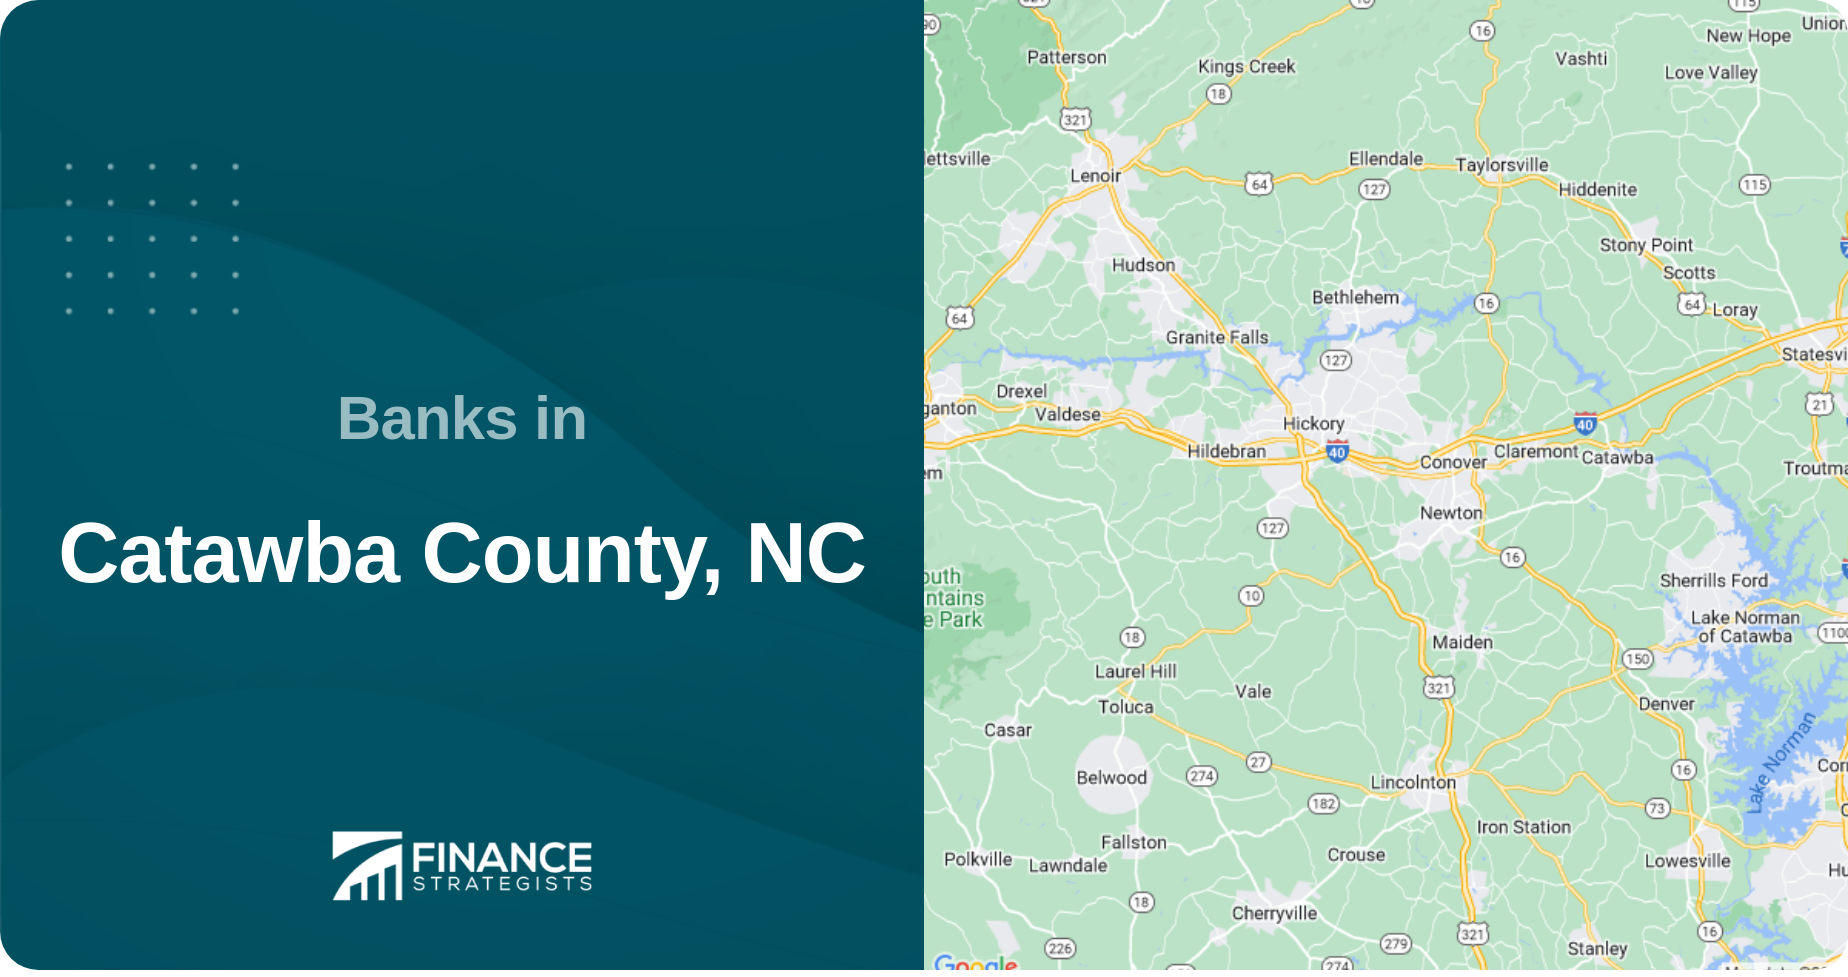 Banks in Catawba County, NC